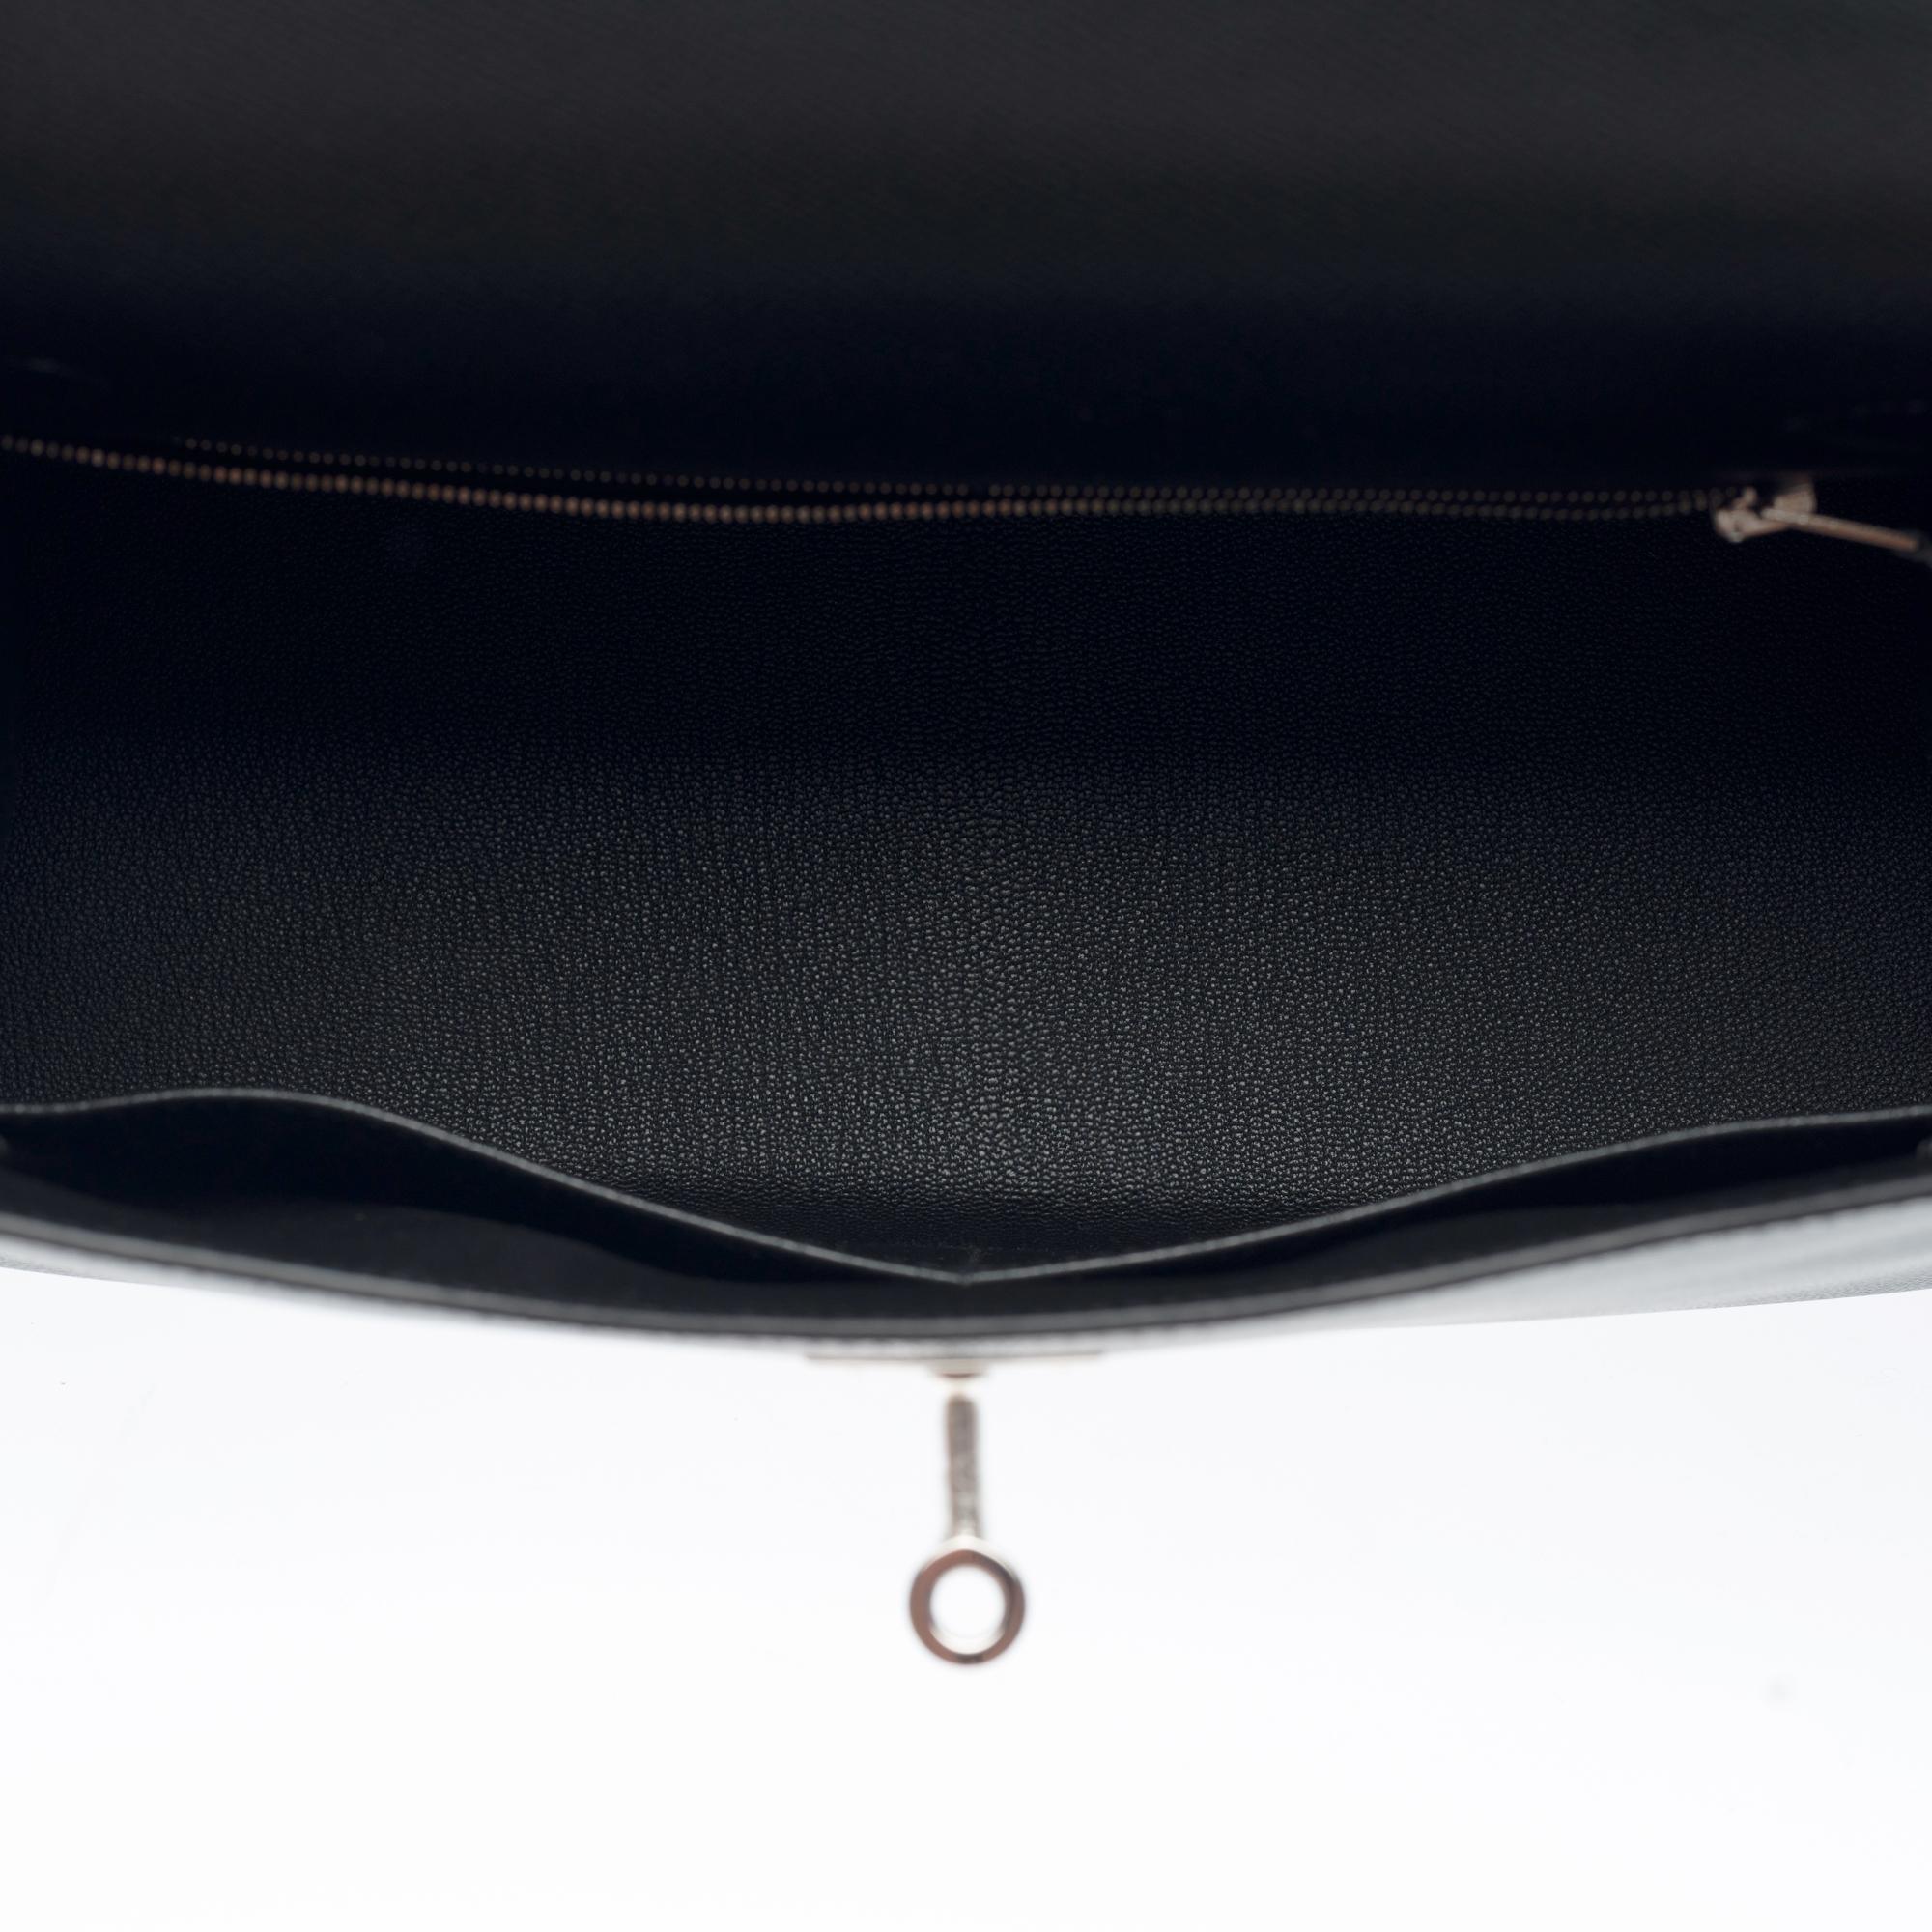 New Hermès Kelly 28 sellier handbag strap in black Epsom leather, SHW 2